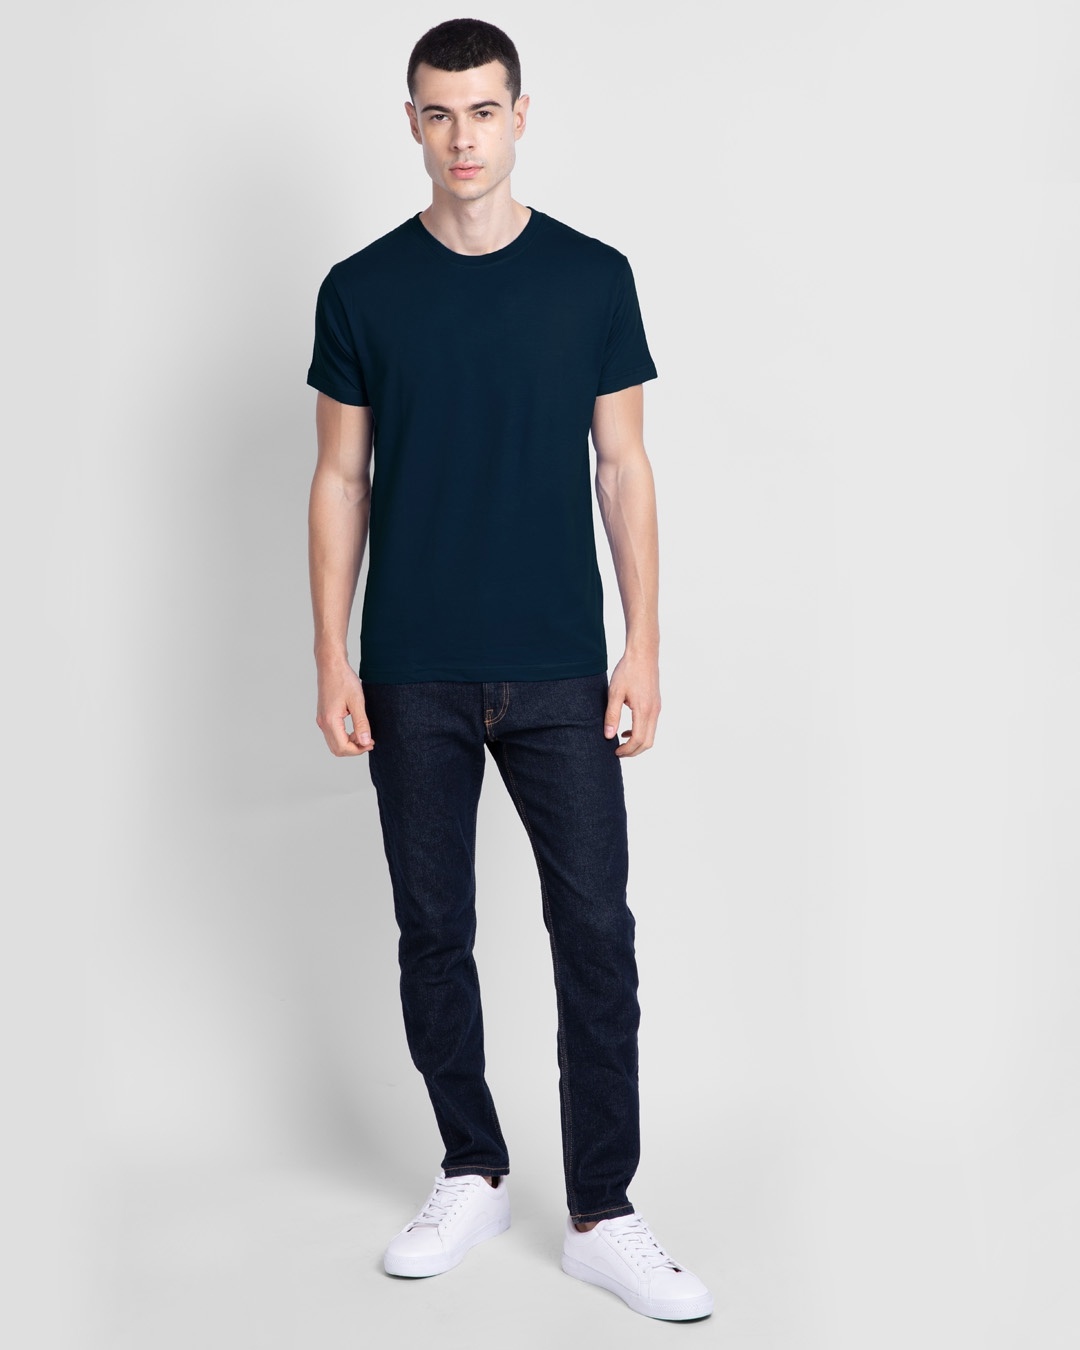 Shop Men's Black and Blue T-shirt Pack of 2